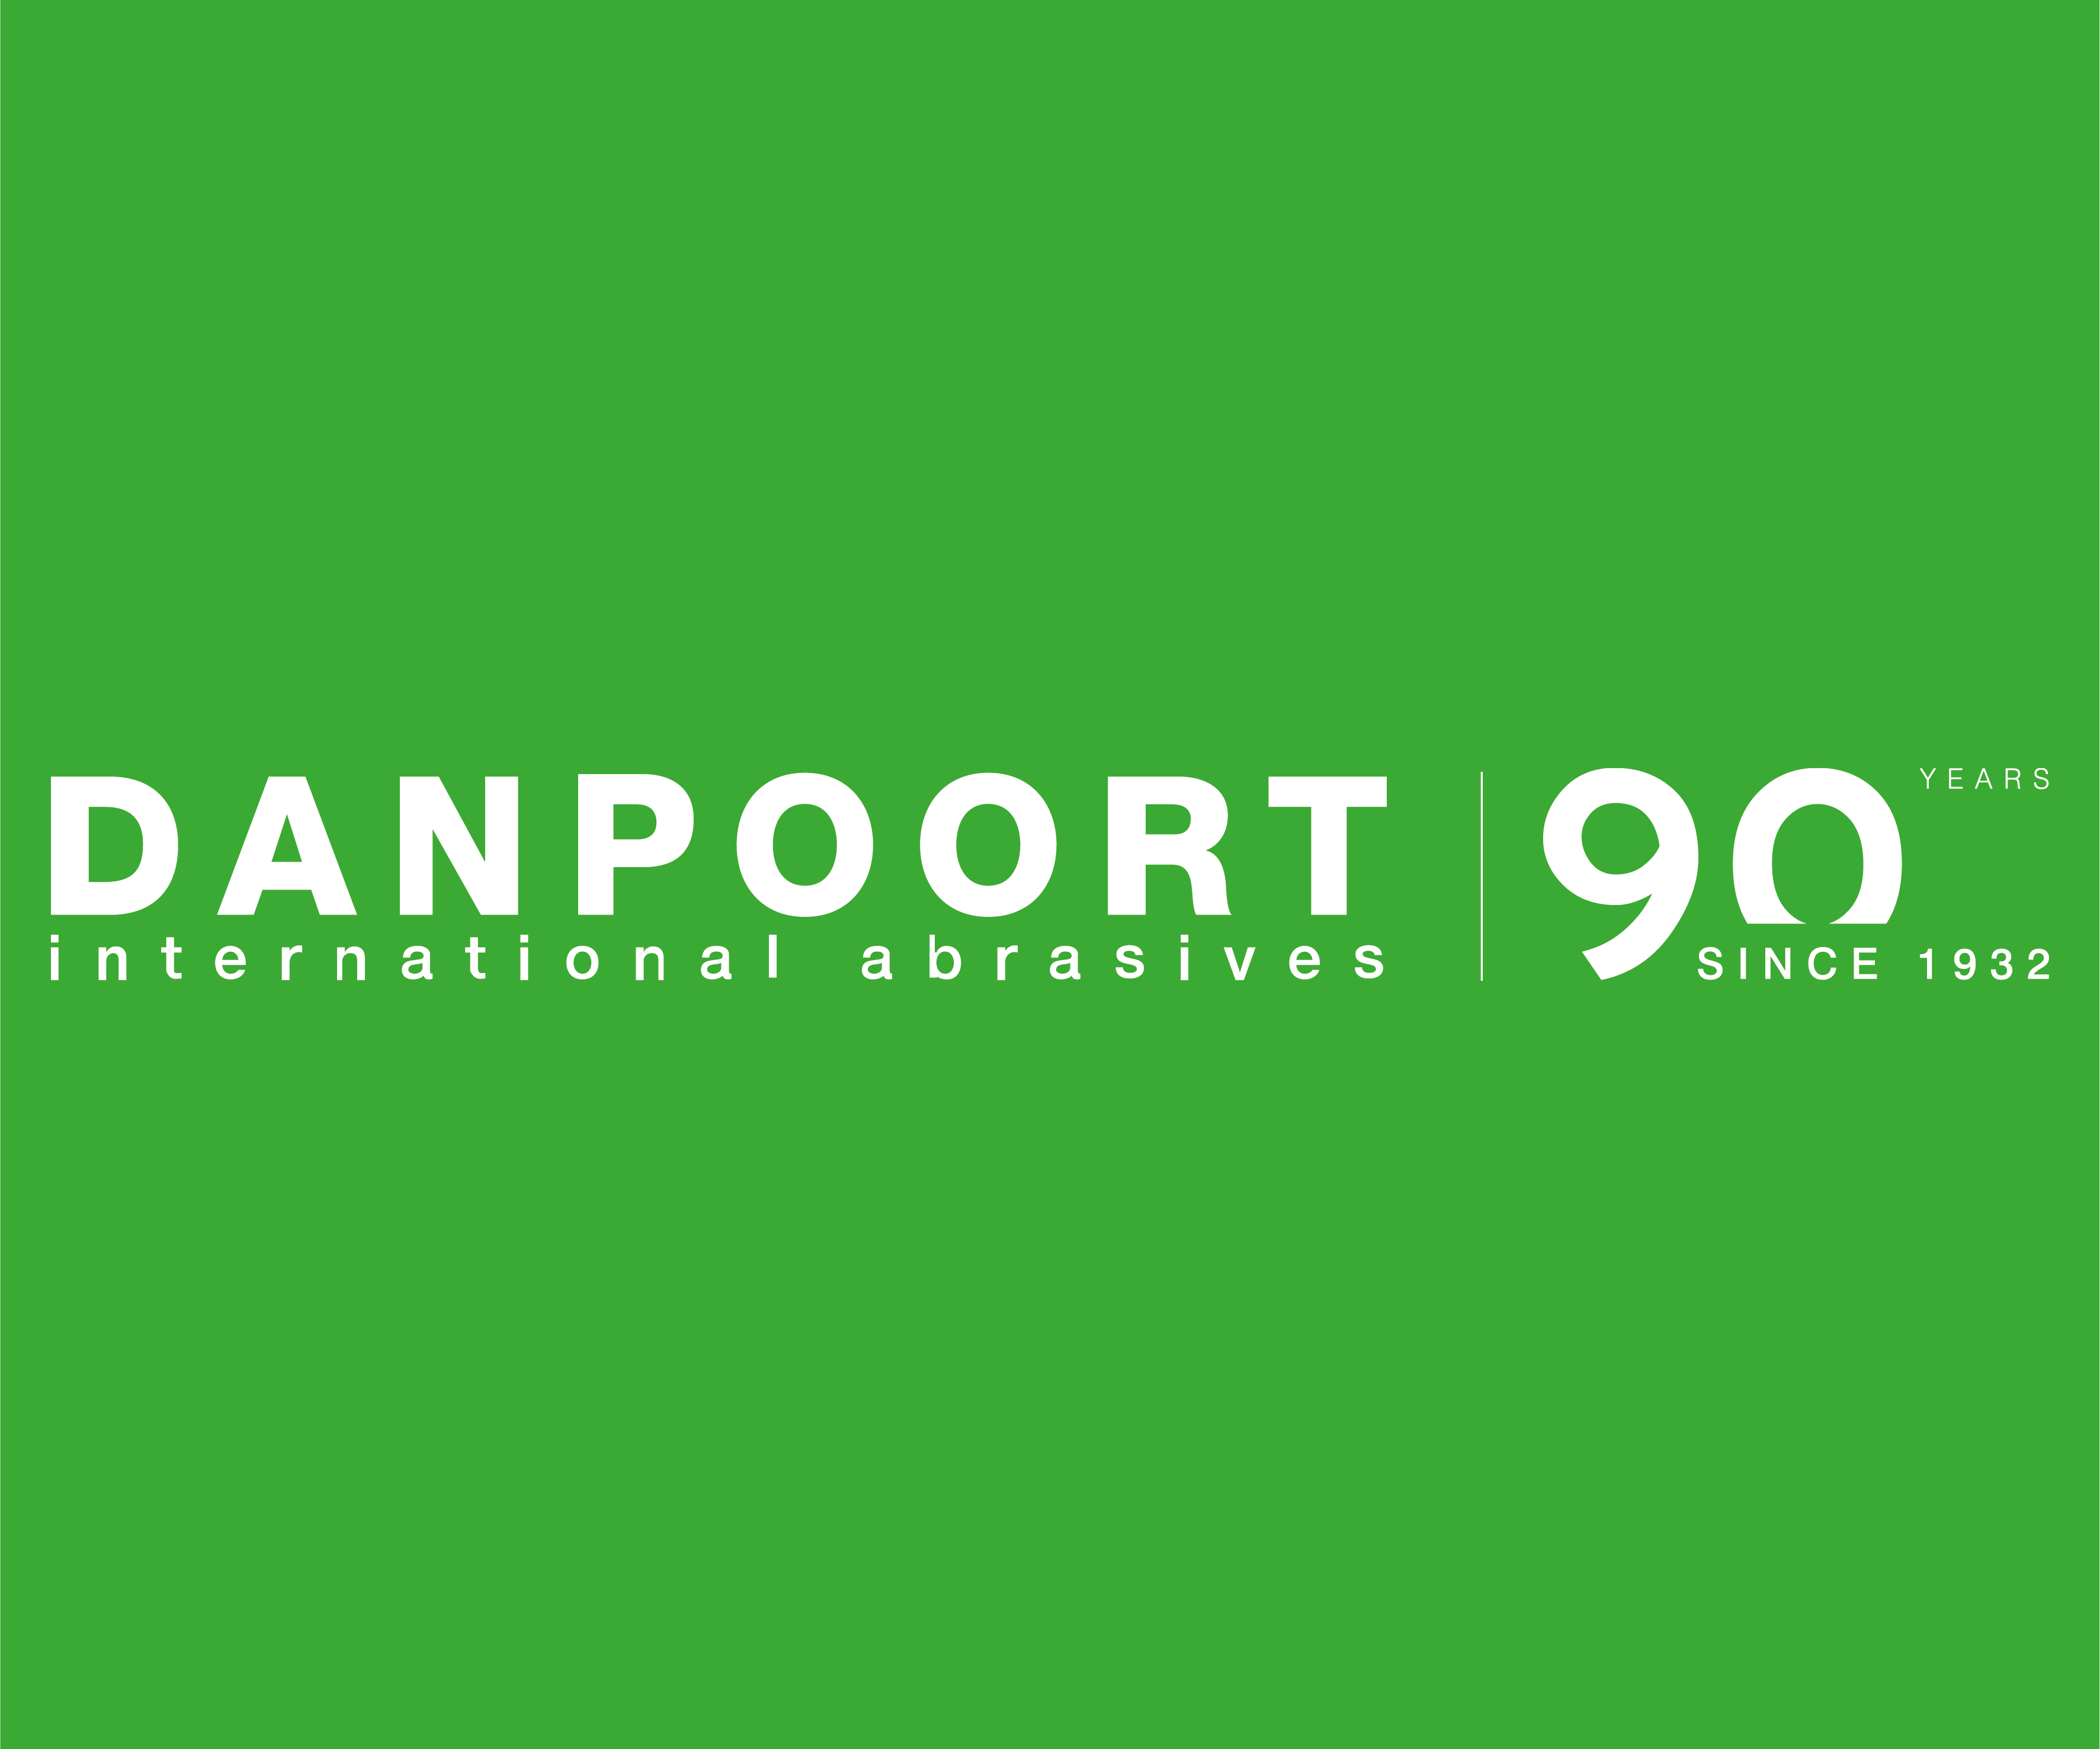 Danpoort International Abrasives 90 year anniversary